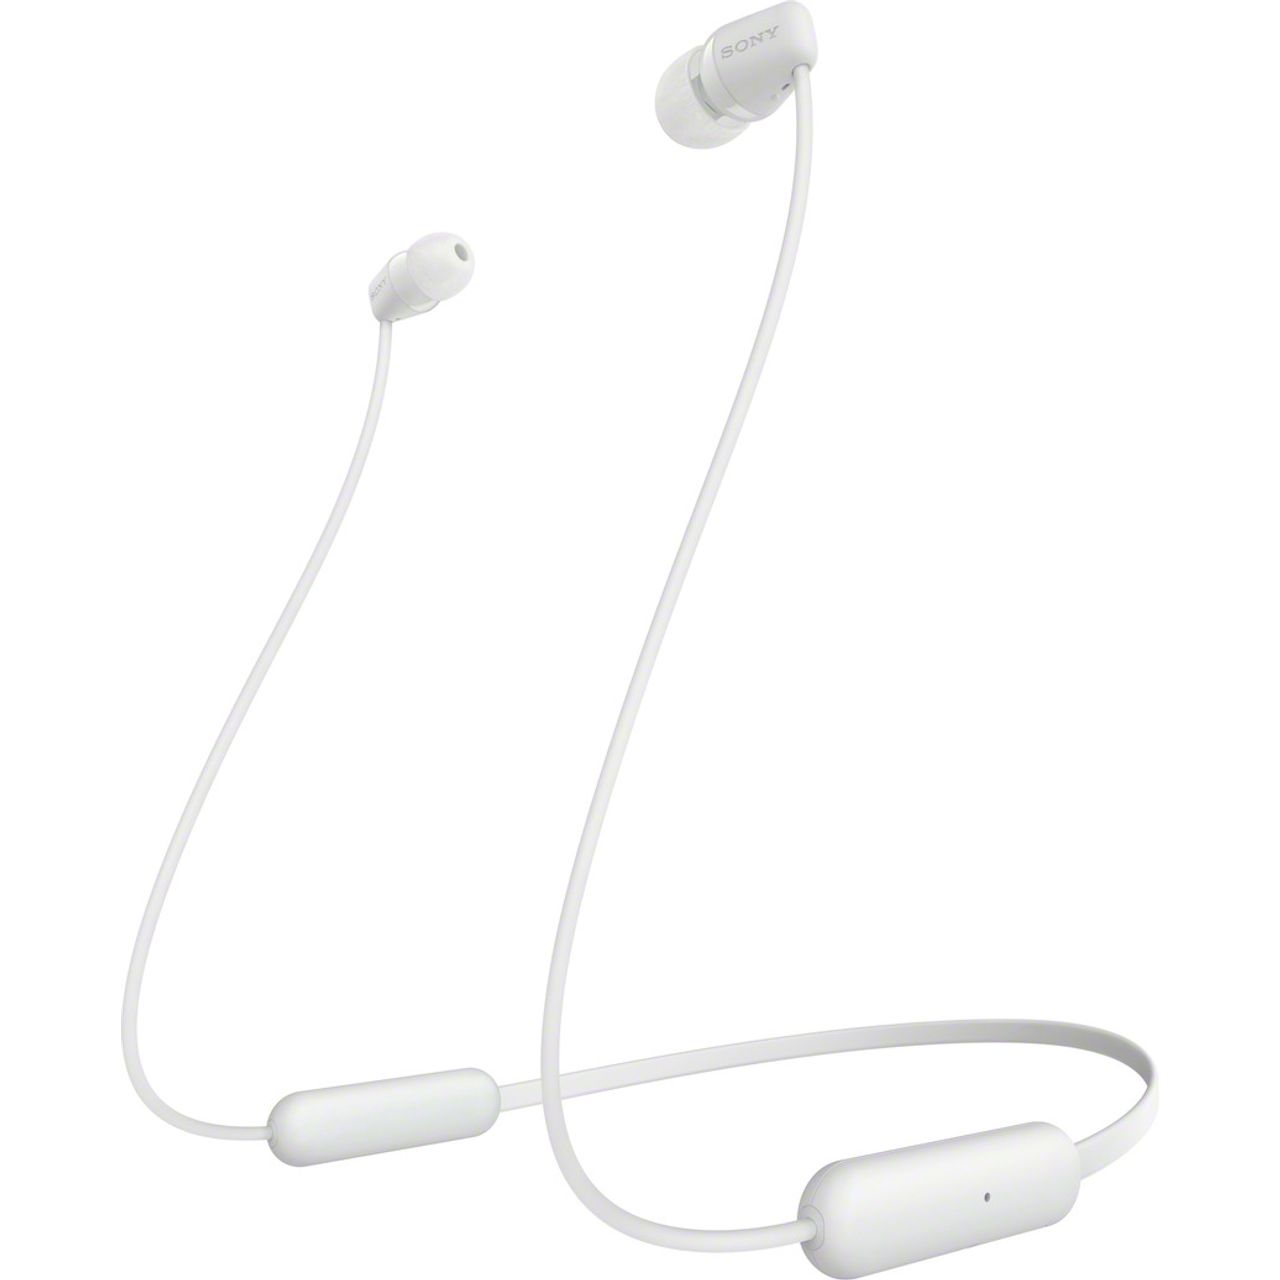 Sony WI-C200 In-Ear Wireless Bluetooth Headphones Review